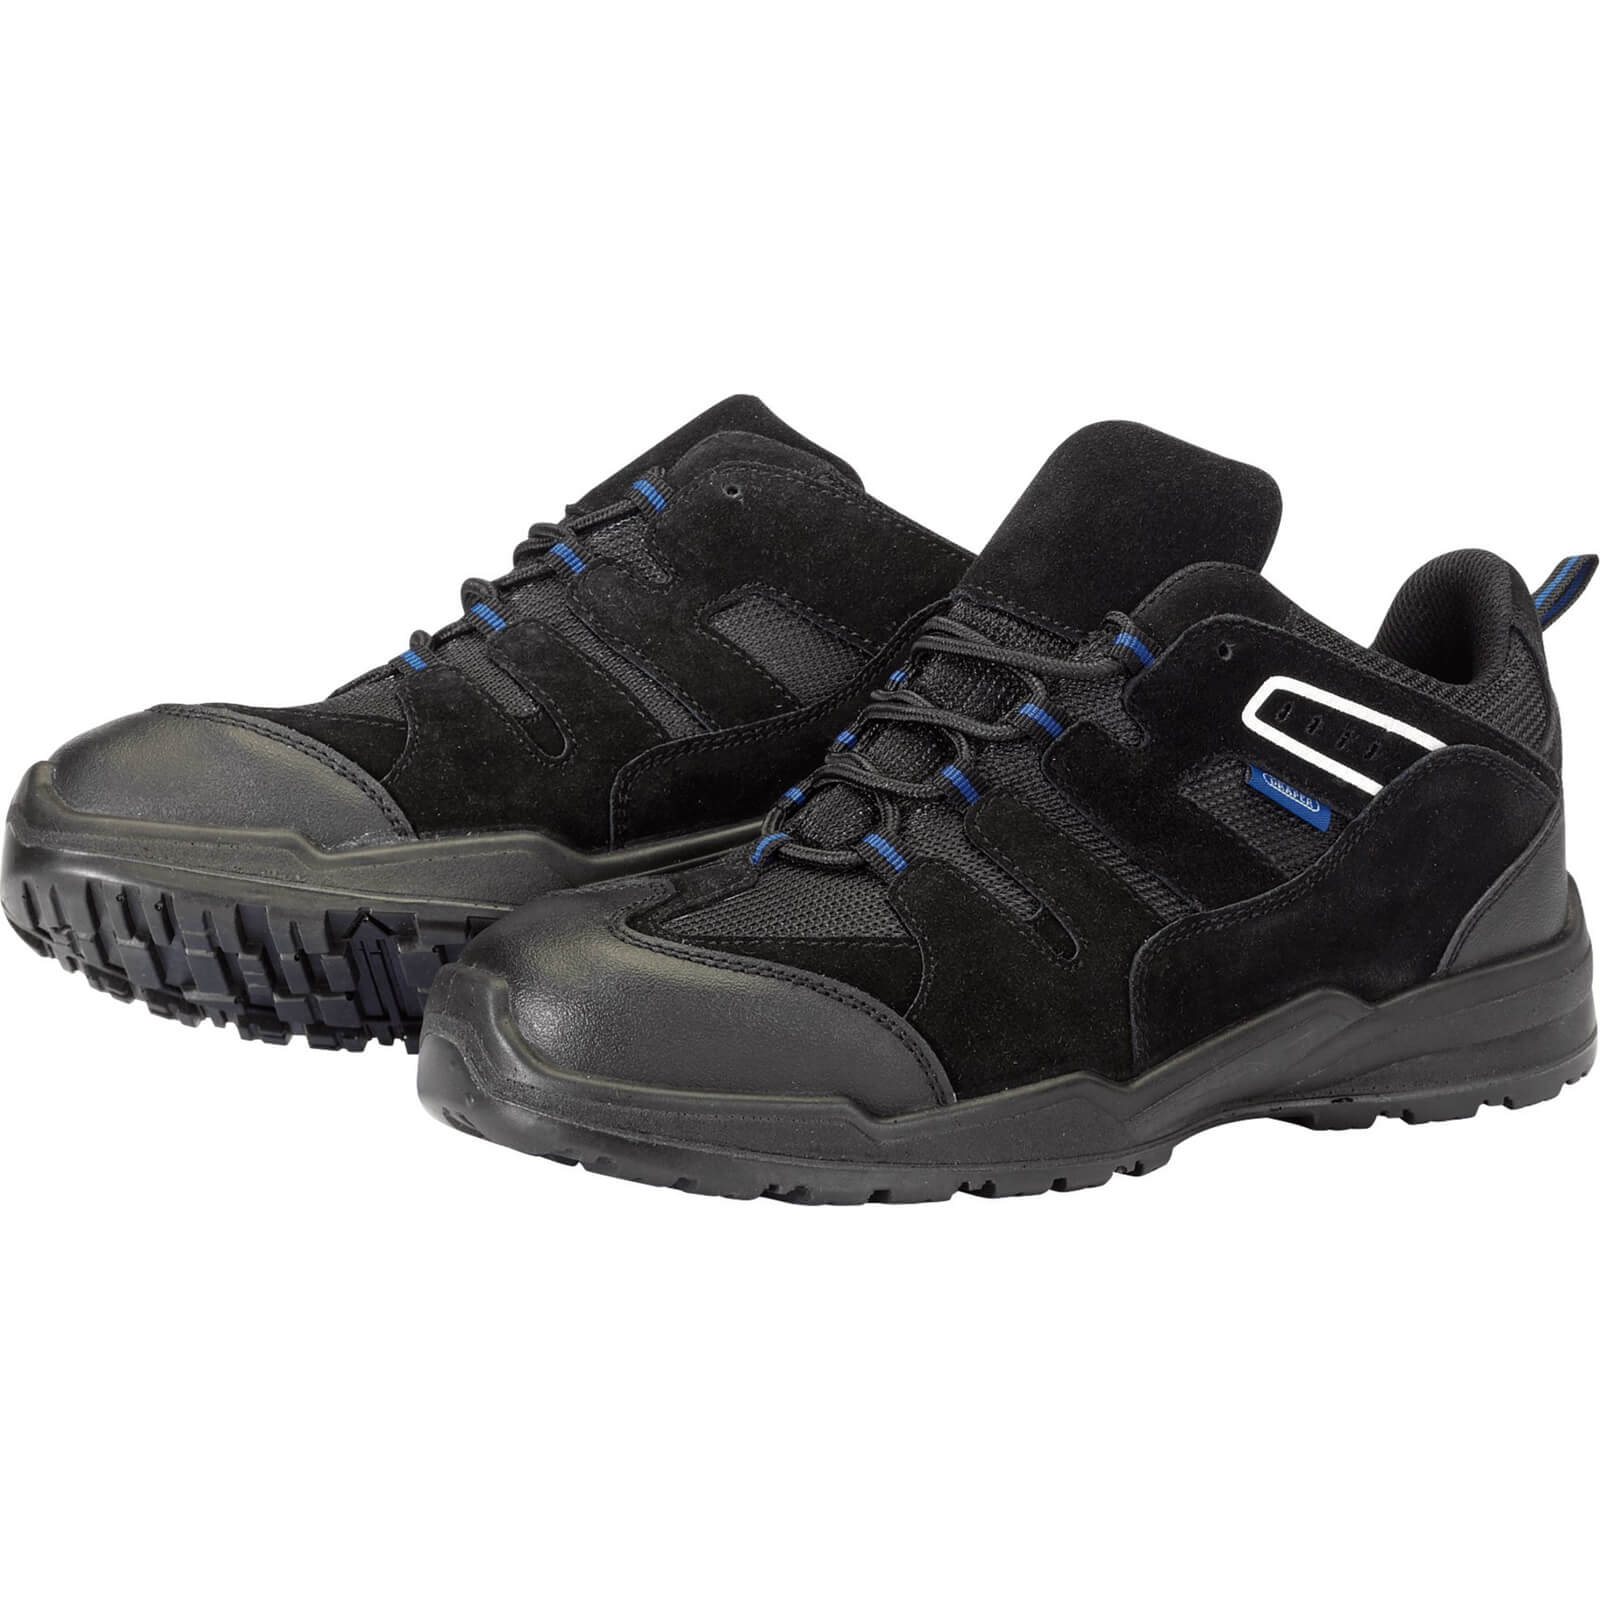 Image of Draper Trainer Style Safety Shoe Black Size 6